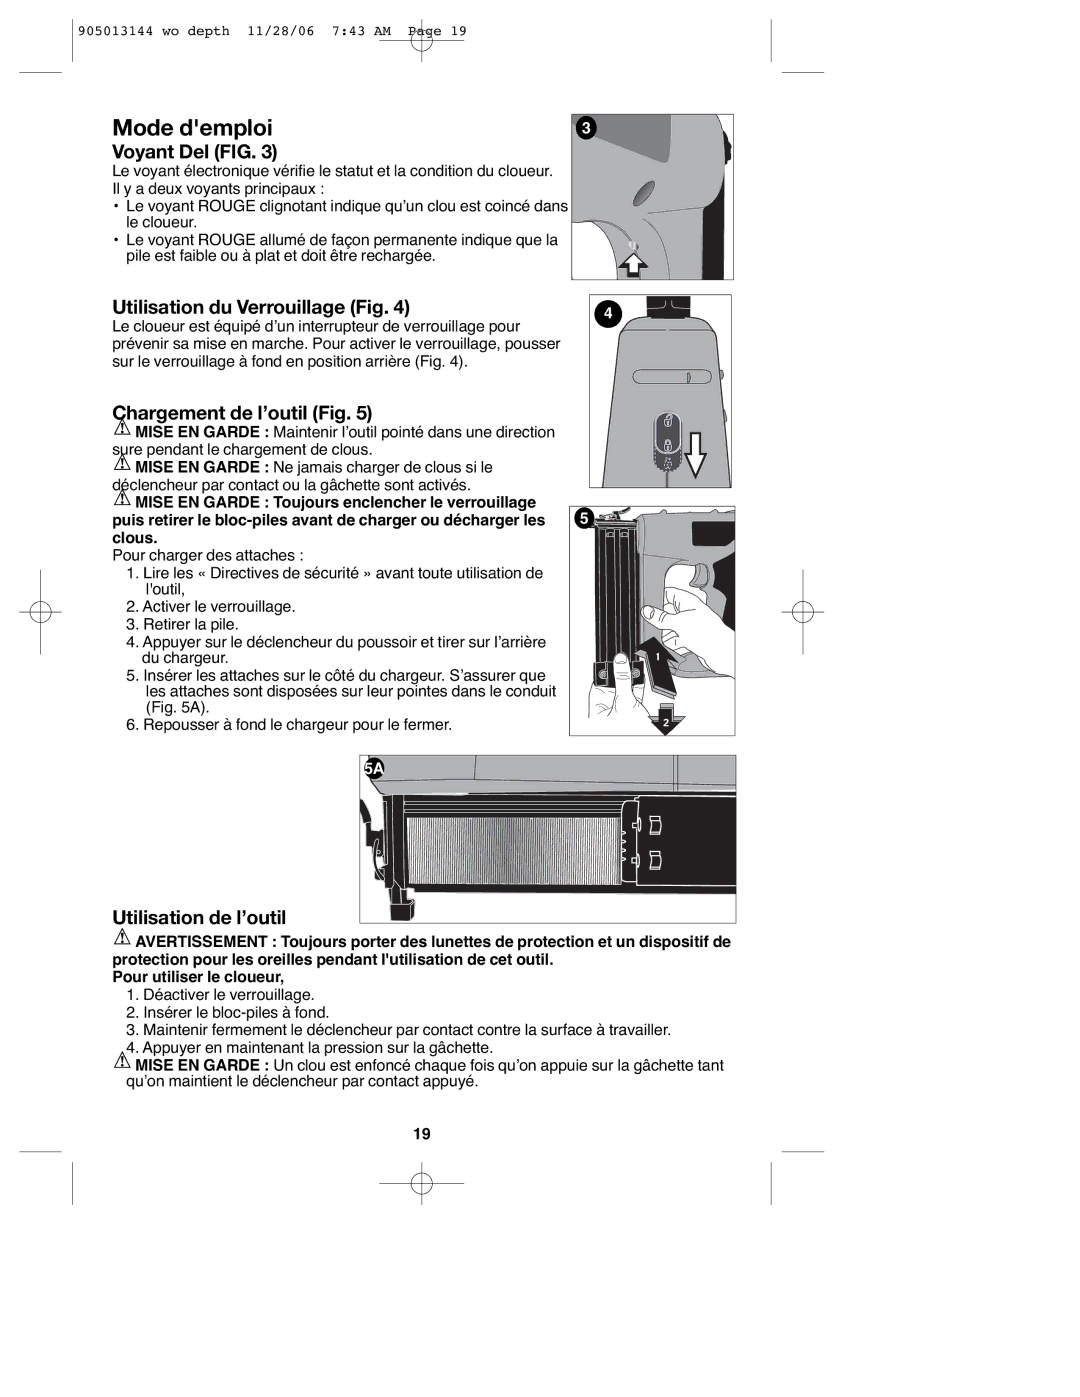 Black & Decker FS1202BN, FS1802BN Mode demploi, Voyant Del FIG, Utilisation du Verrouillage Fig, Chargement de l’outil Fig 